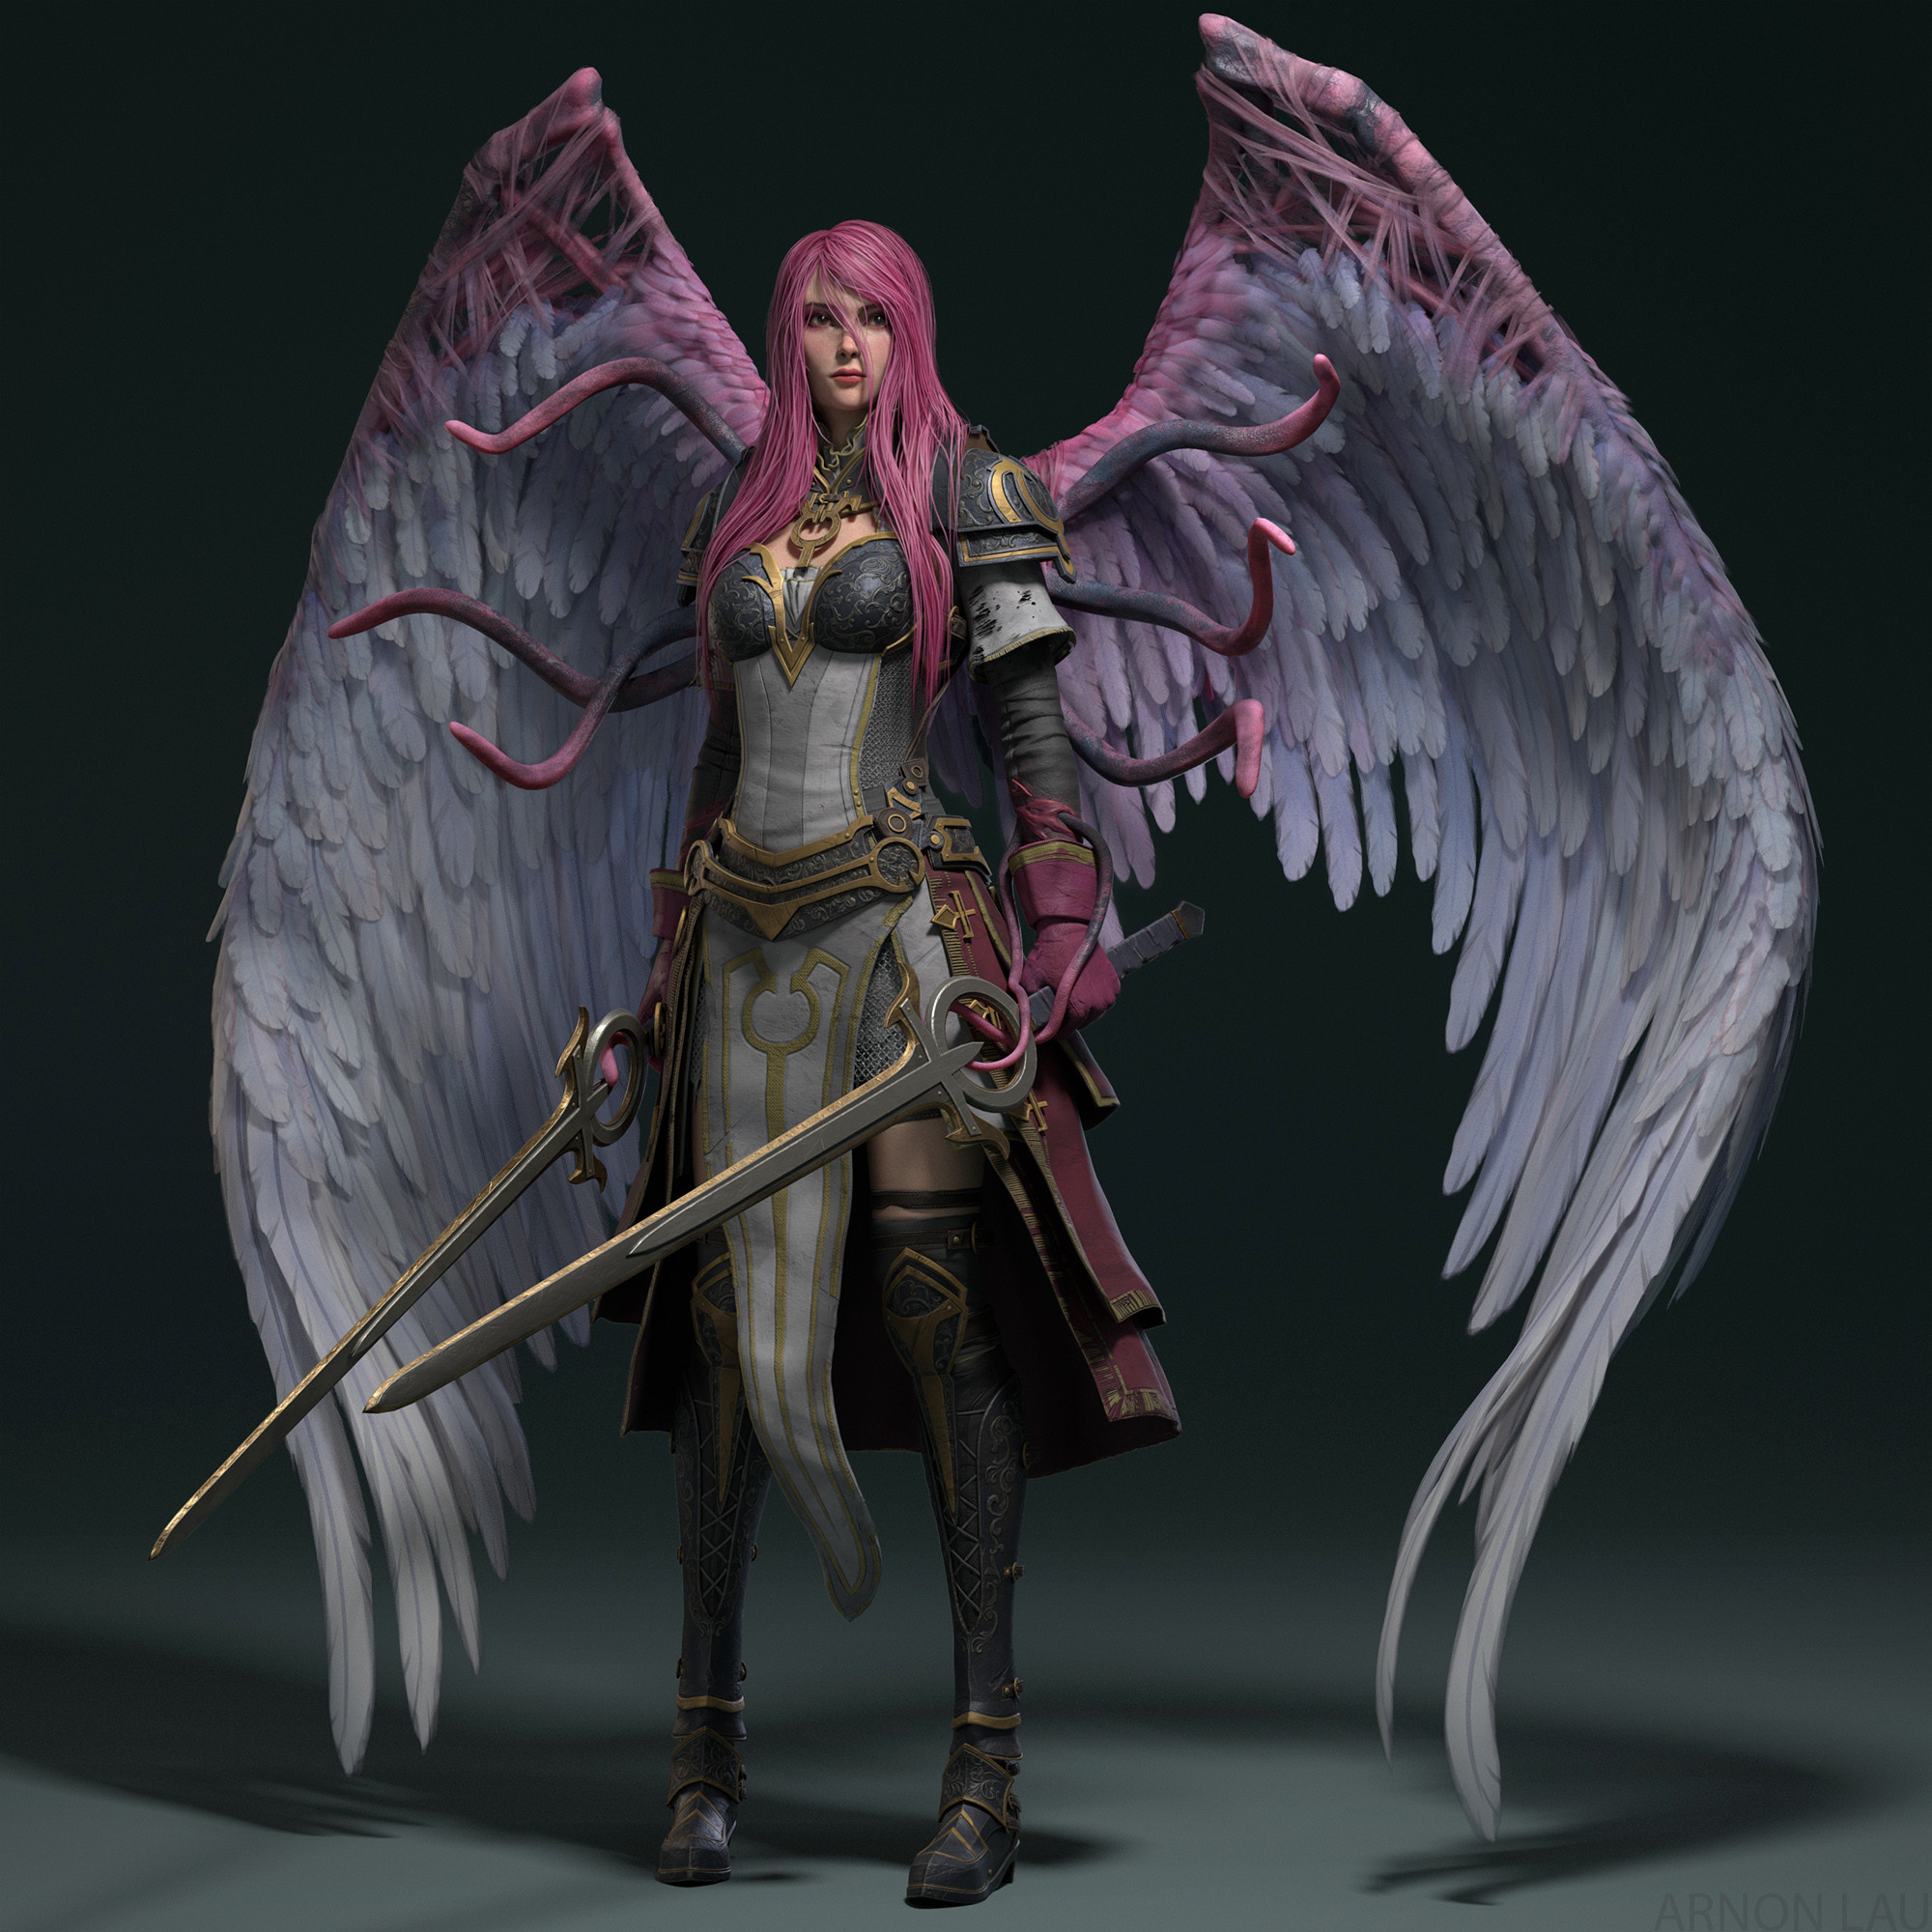 General 2000x2000 Arnon Lau fantasy girl fantasy art women with swords simple background wings artwork pink hair standing long hair digital art